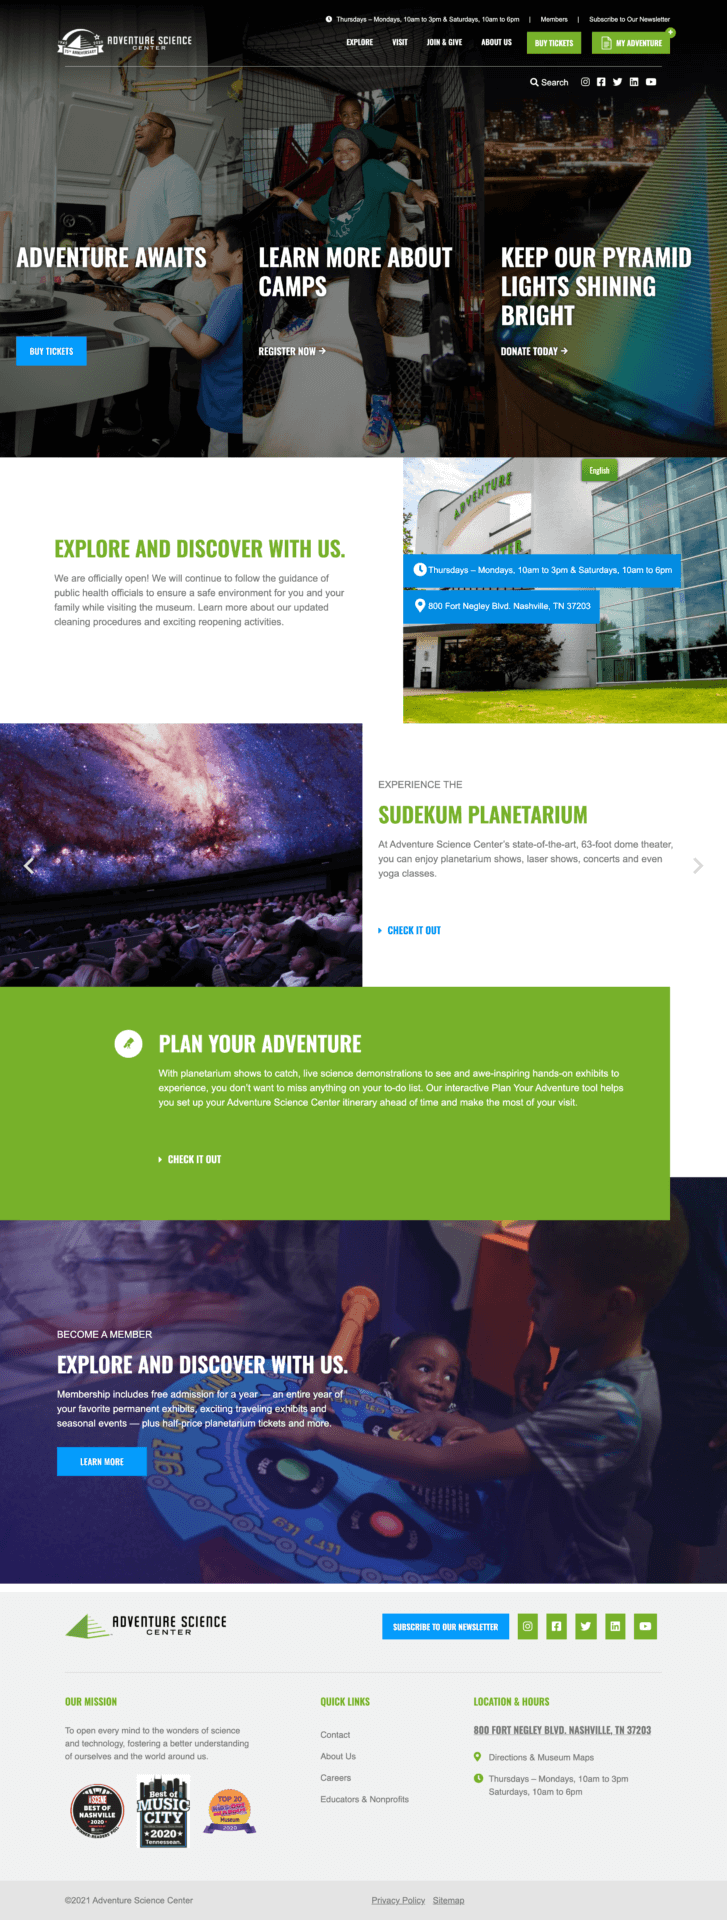 Adventure Science Center: Website 